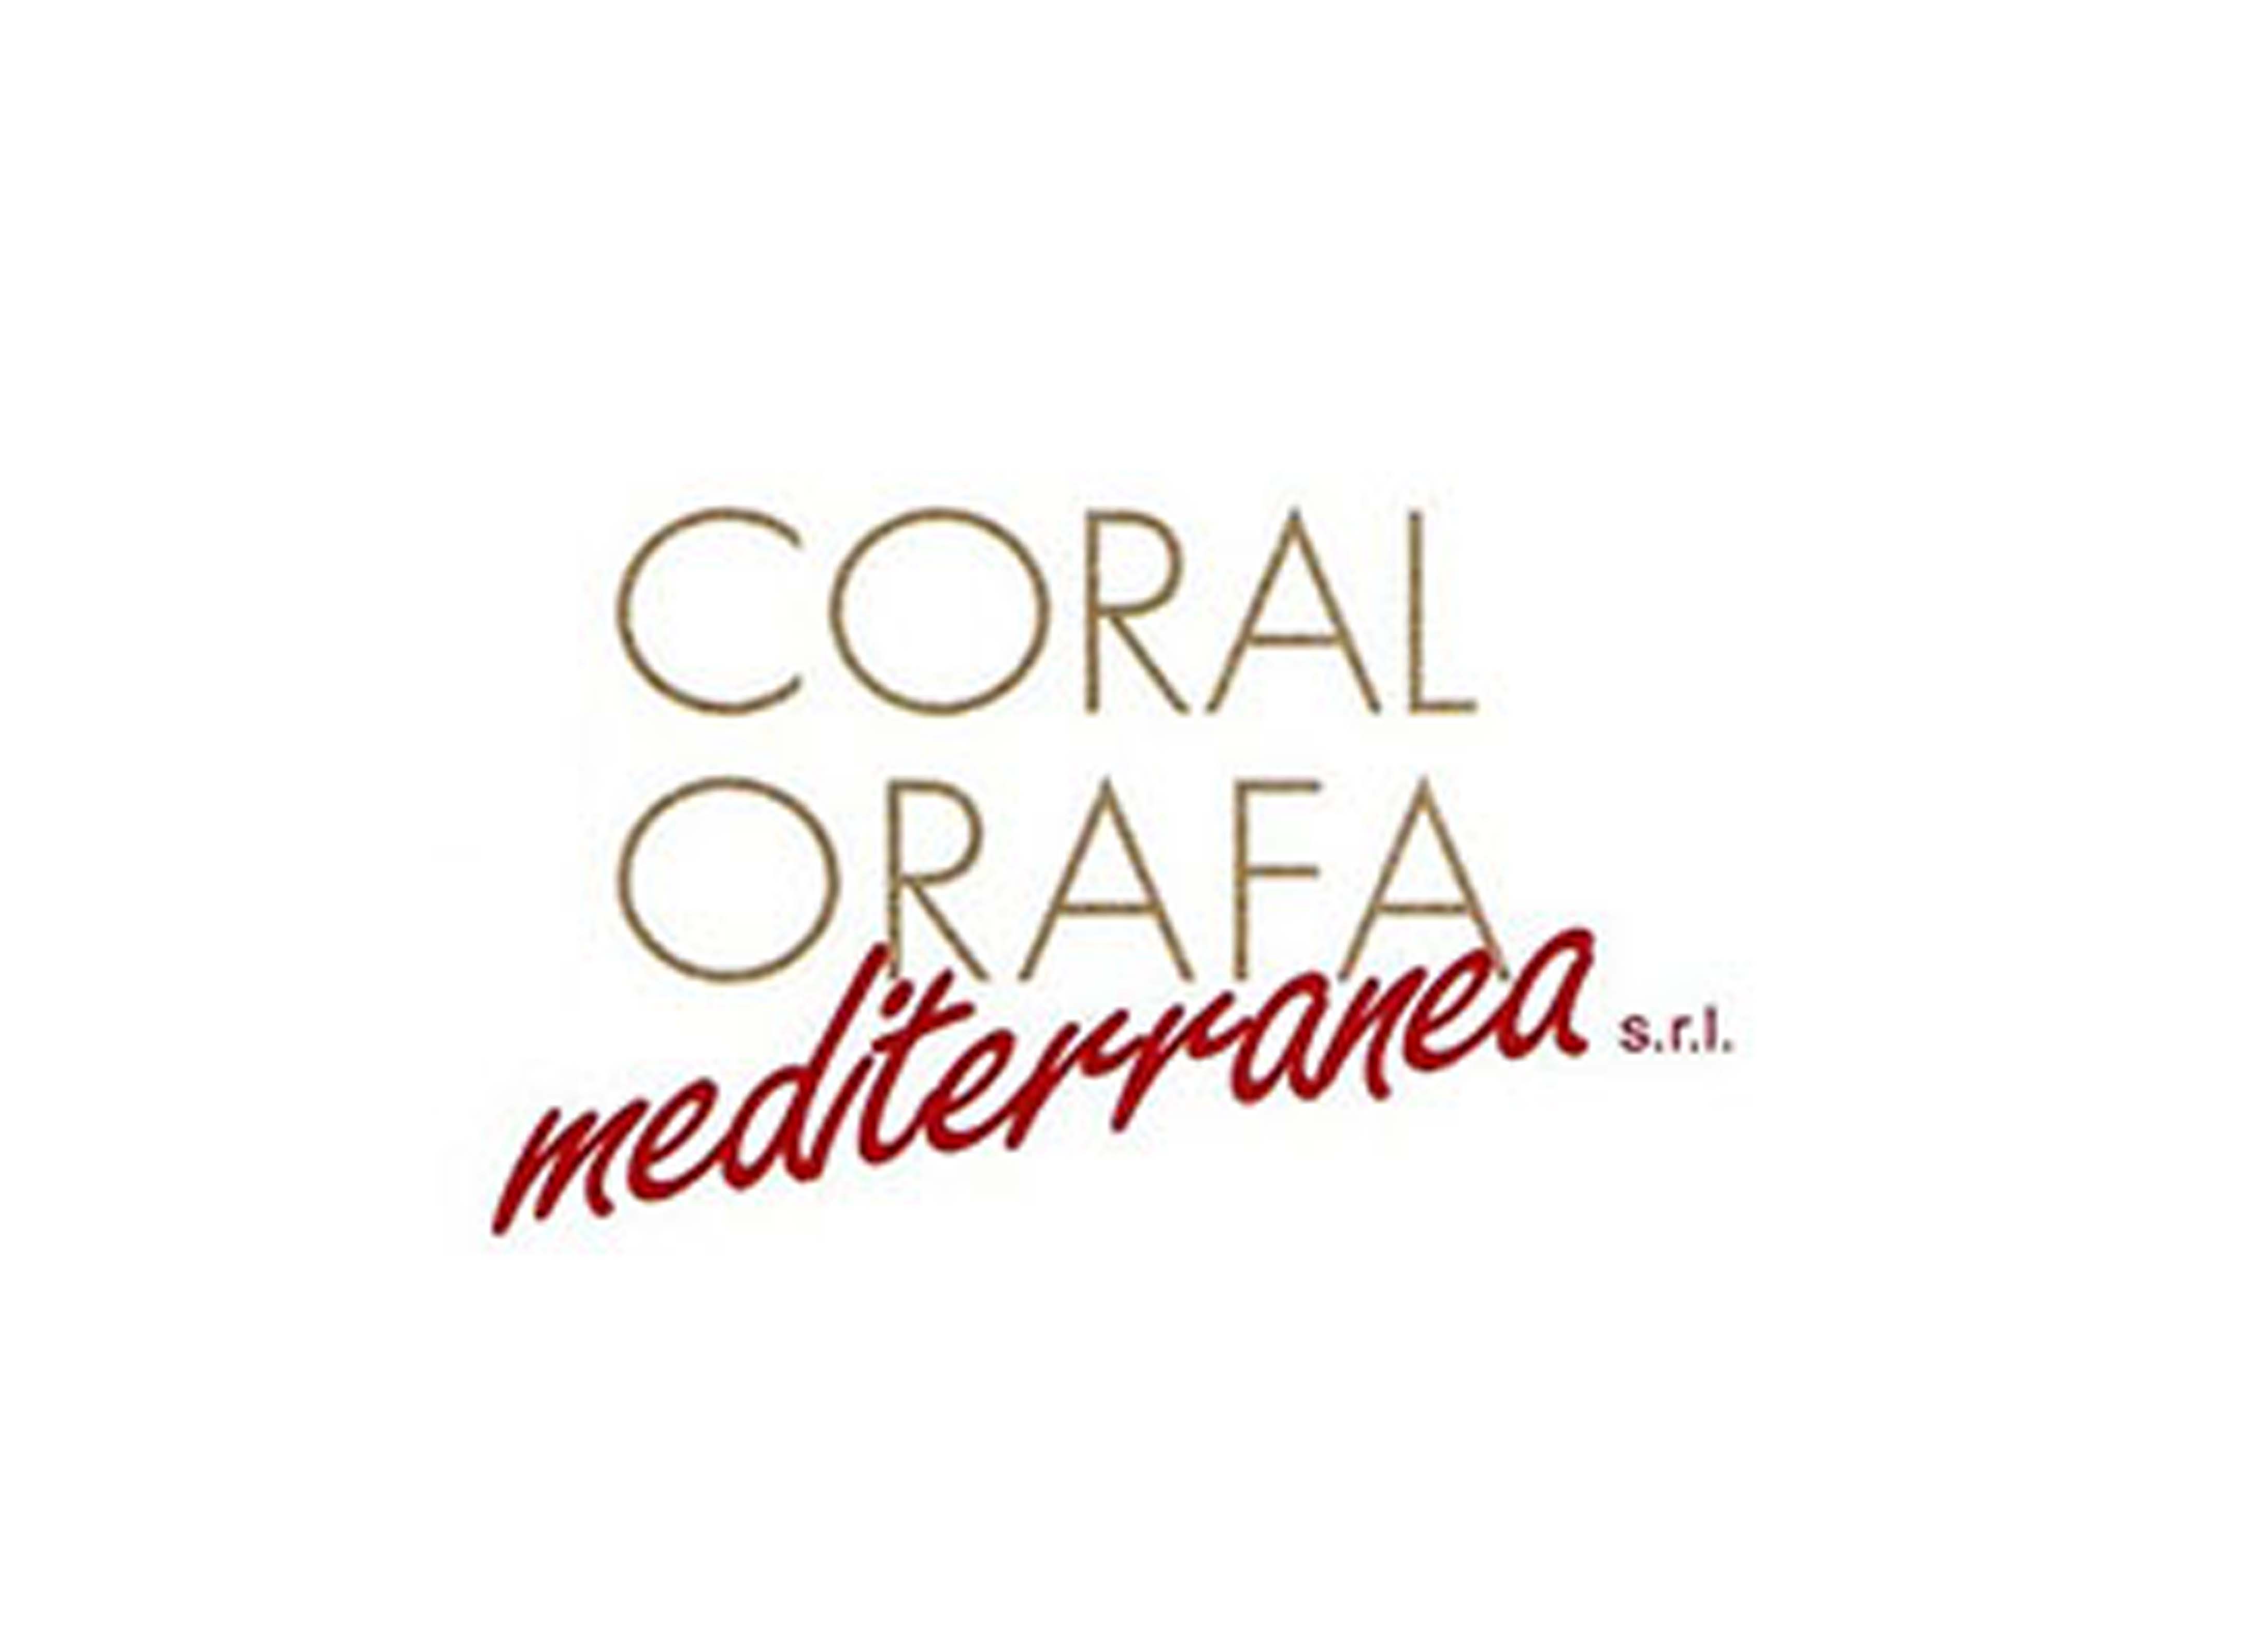 Coral Orafa Mediterranea srl